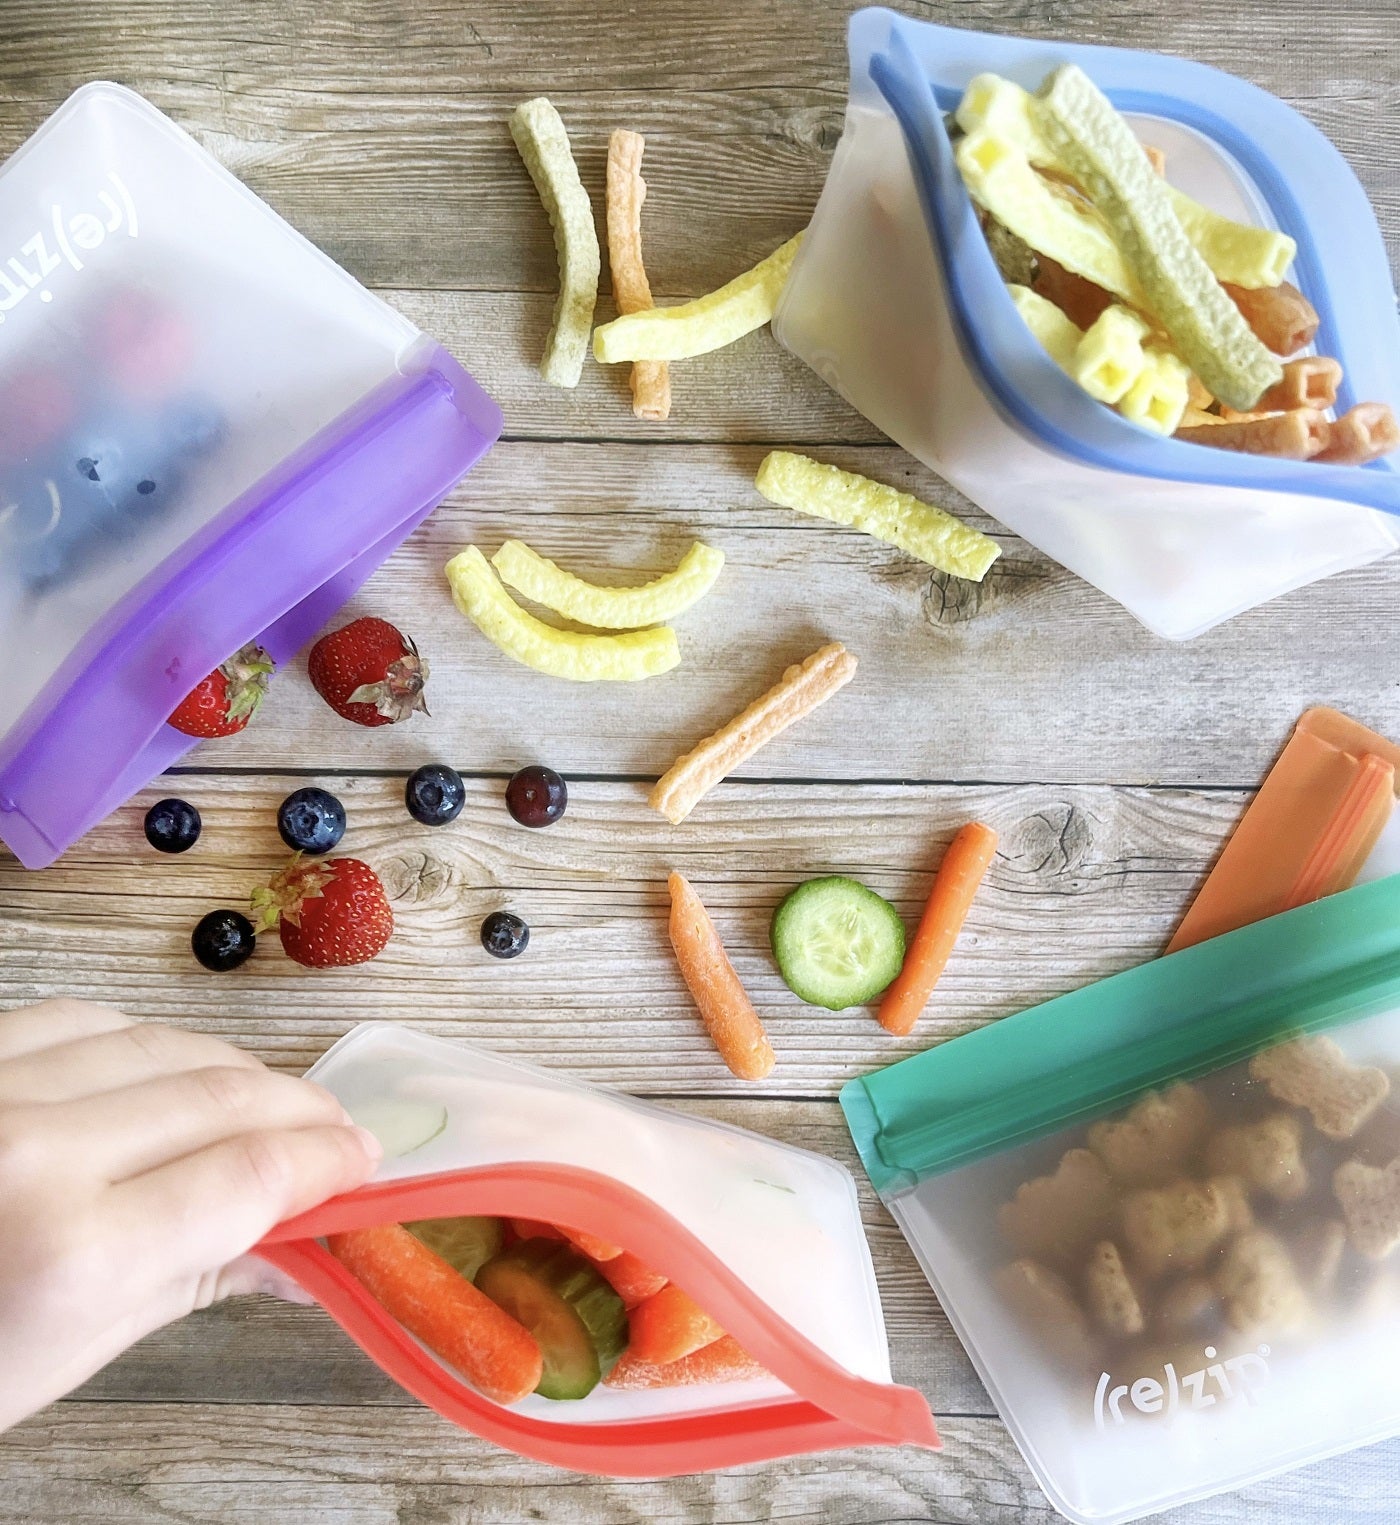 re)zip Reusable Leak-proof Food Storage Stand-up Bag Kit - Snack